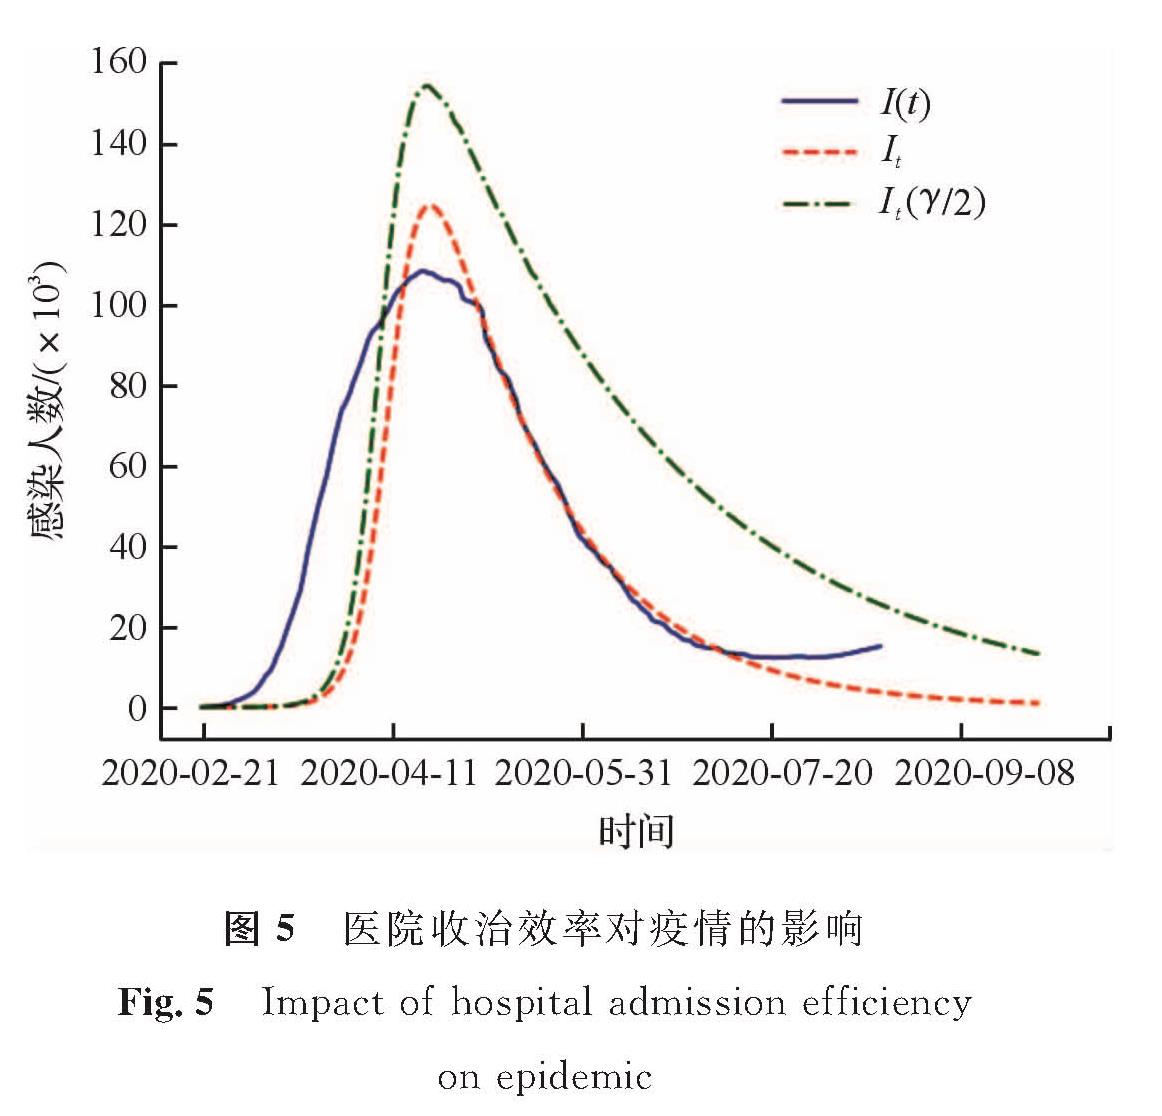 图5 医院收治效率对疫情的影响<br/>Fig.5 Impact of hospital admission efficiency on epidemic